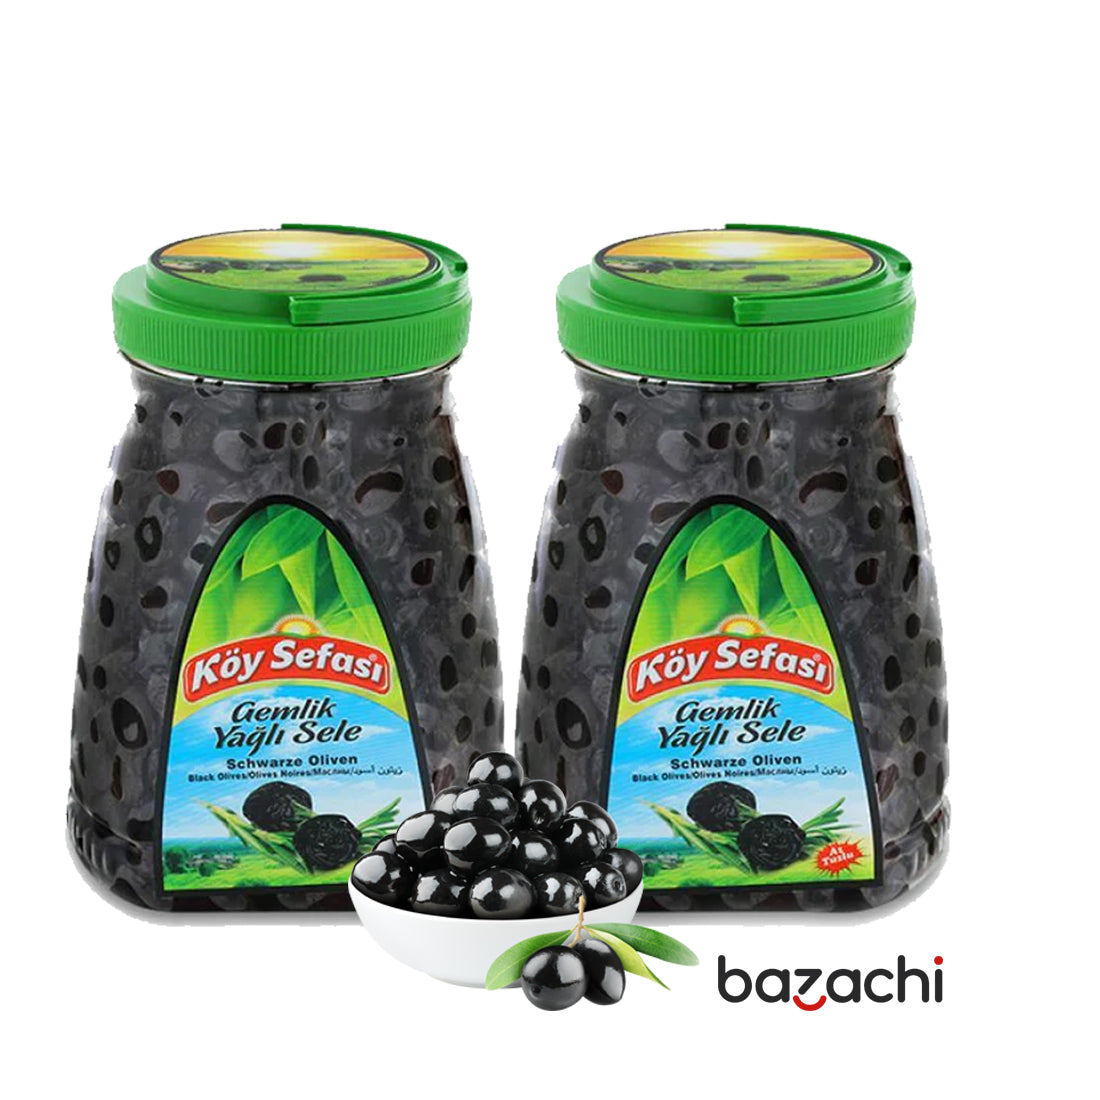 Koy Sefasi Sele Natural Black Olive (1.5KG)